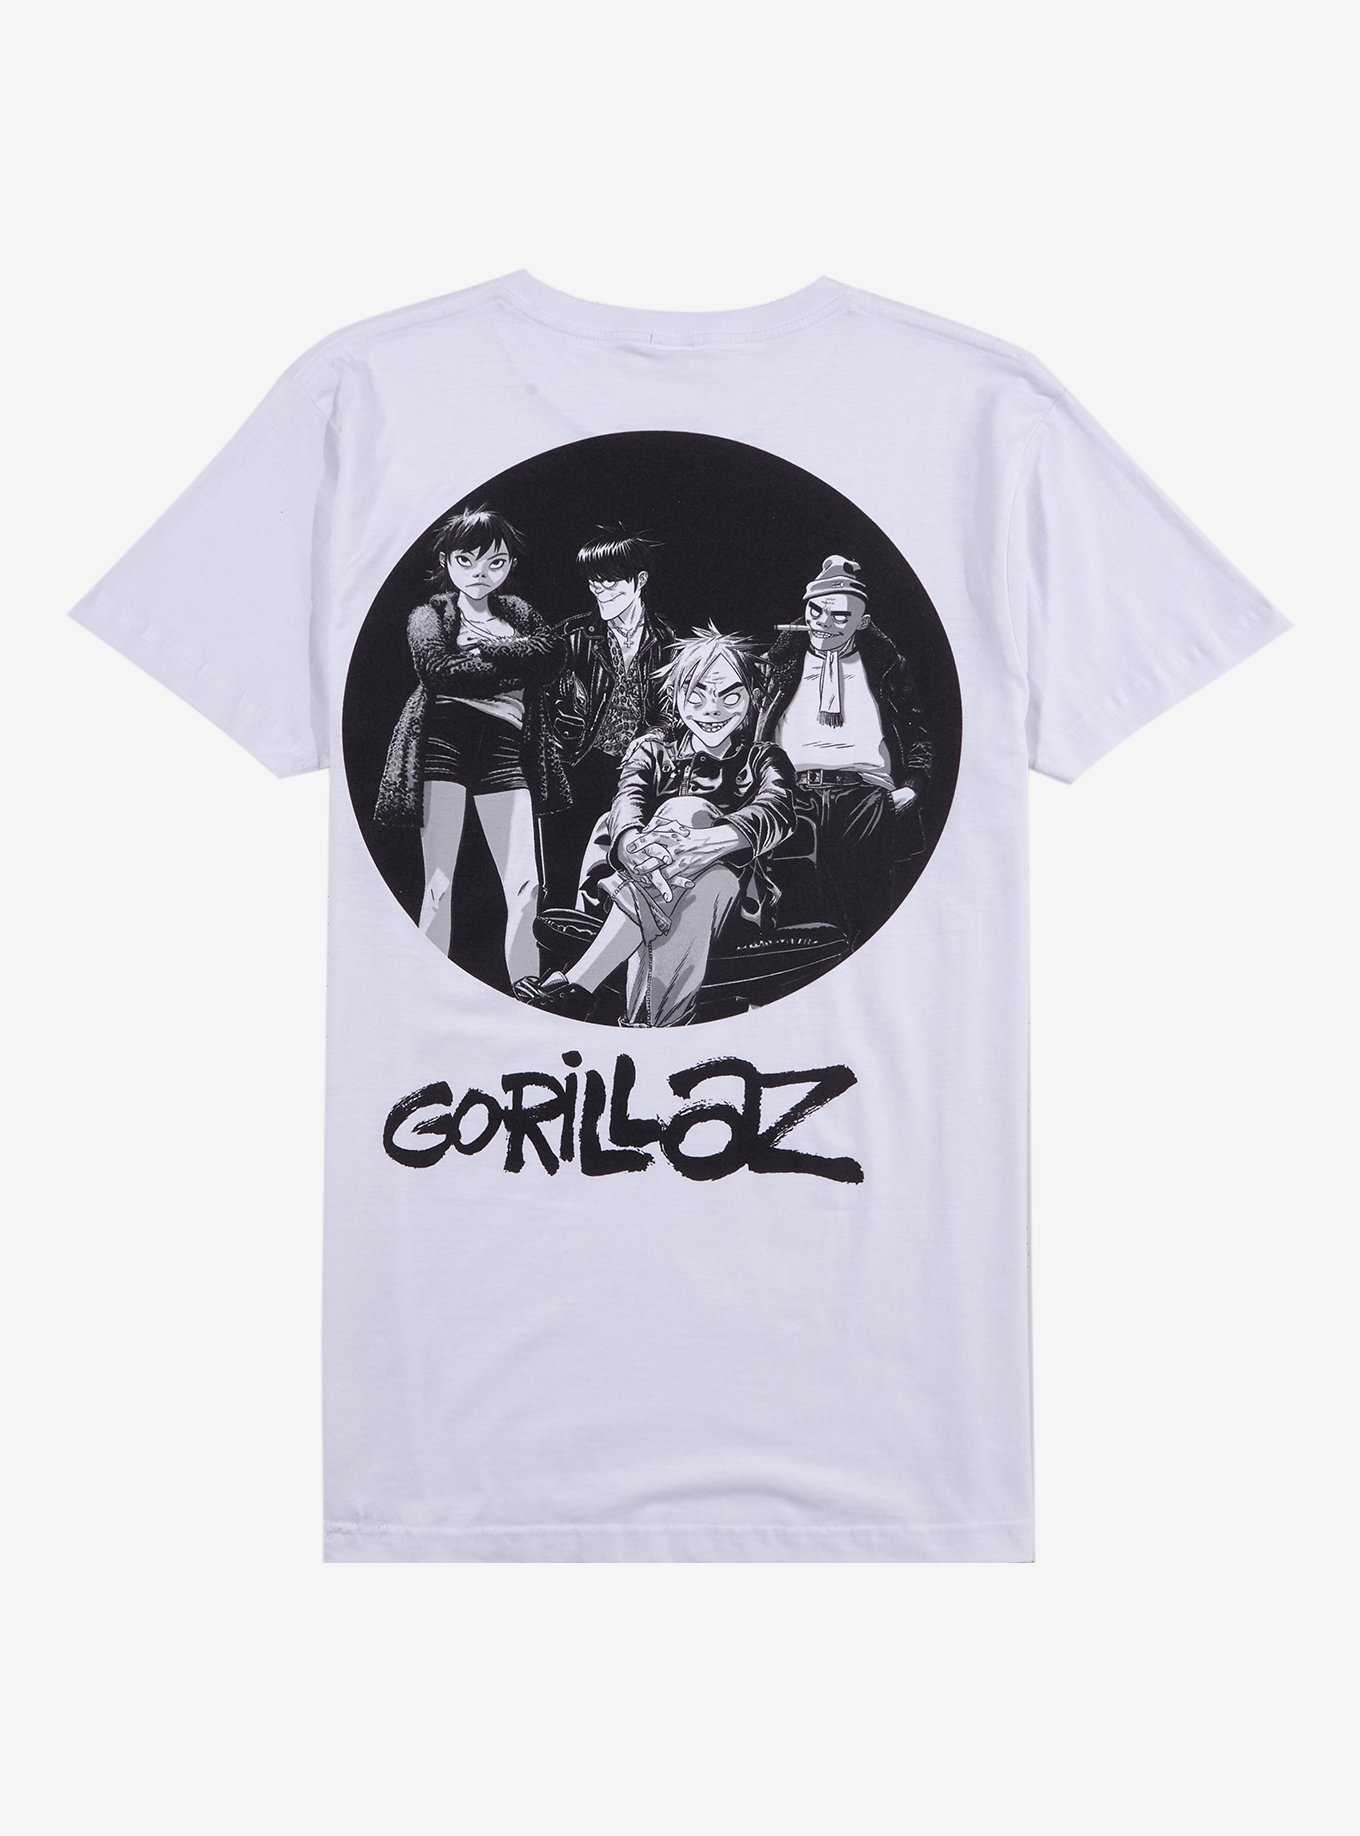 Gorillaz Song Machine Group Boyfriend Fit Girls T-Shirt, , hi-res